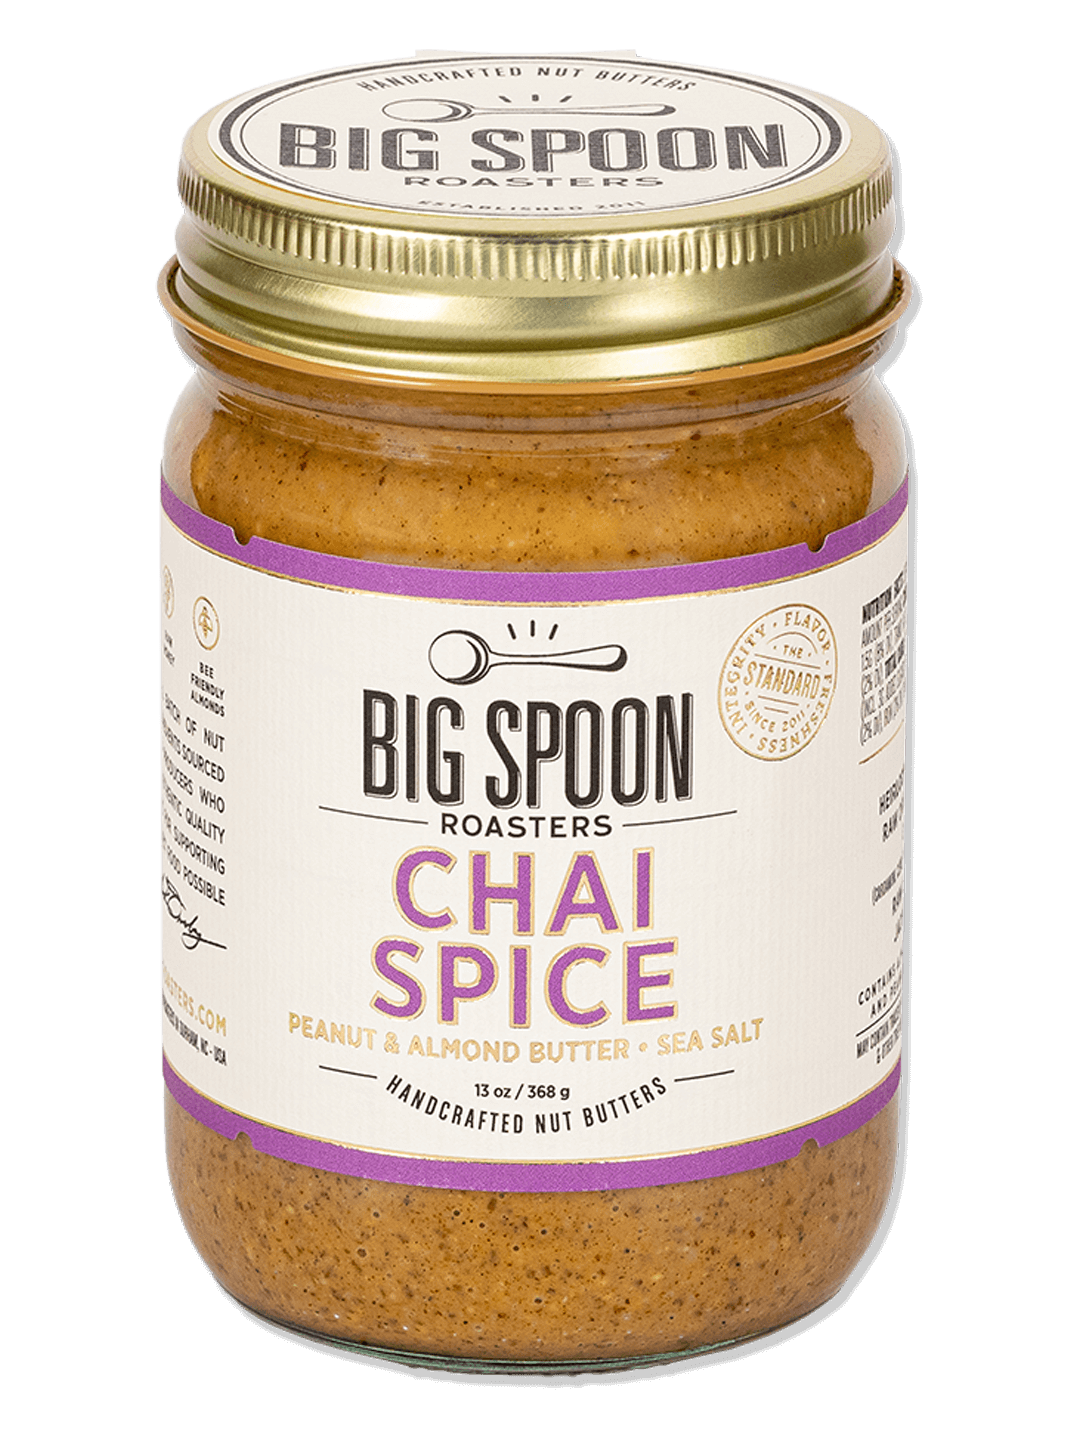 13oz jar of Chai Spice Peanut & Almond Butter